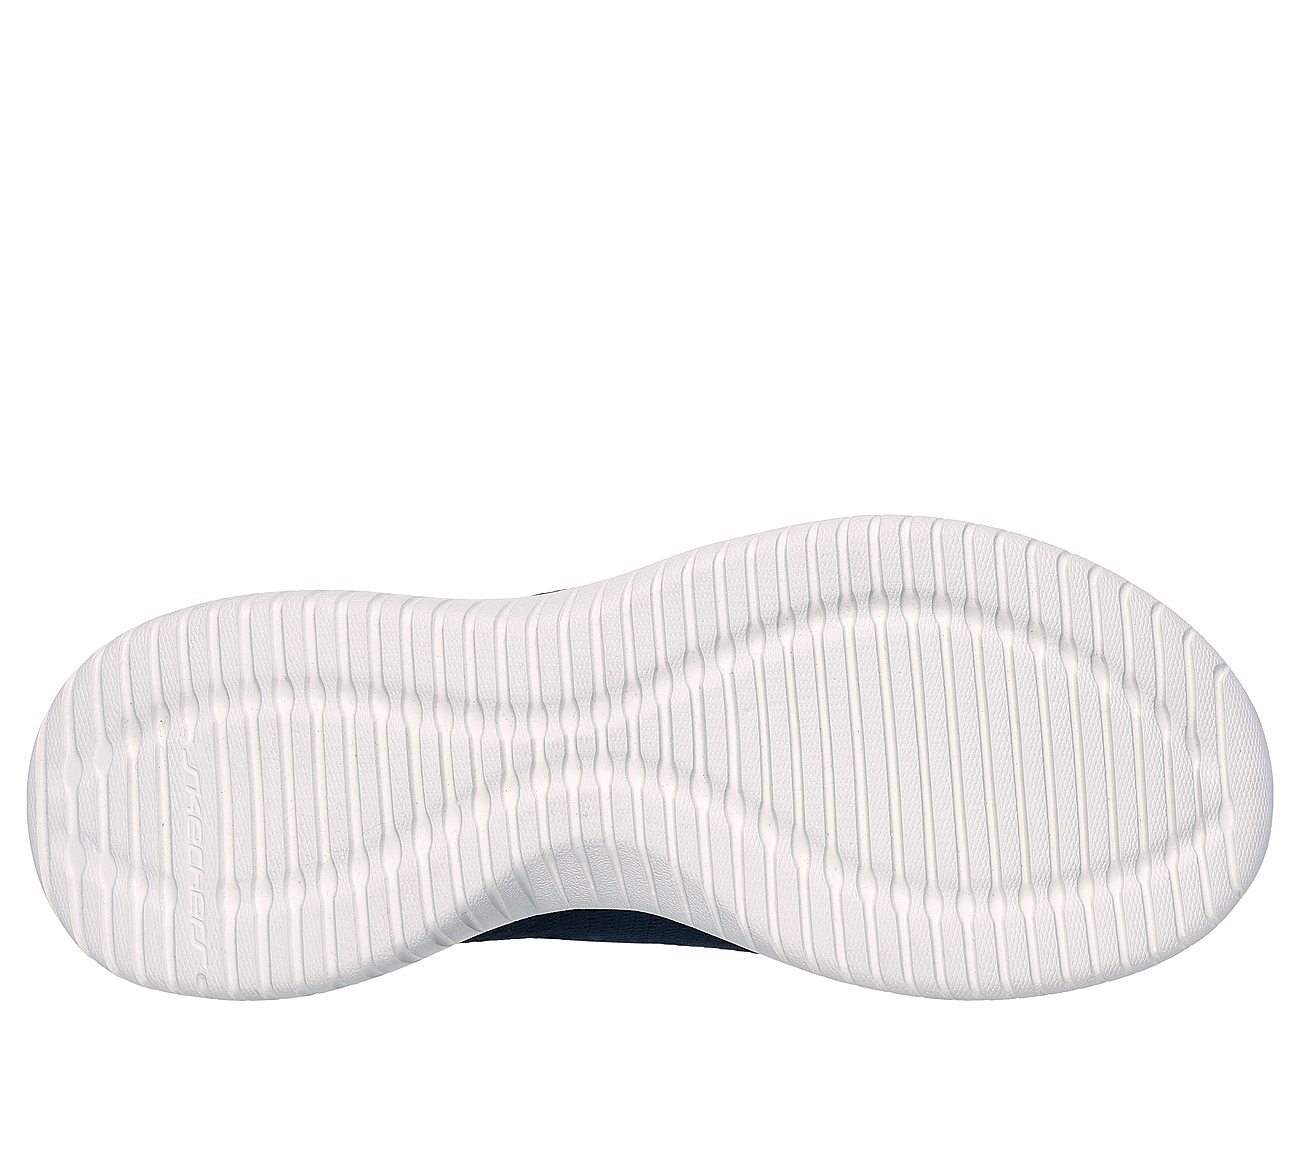 ULTRA FLEX-FIRST TAKE, NNNAVY Footwear Bottom View